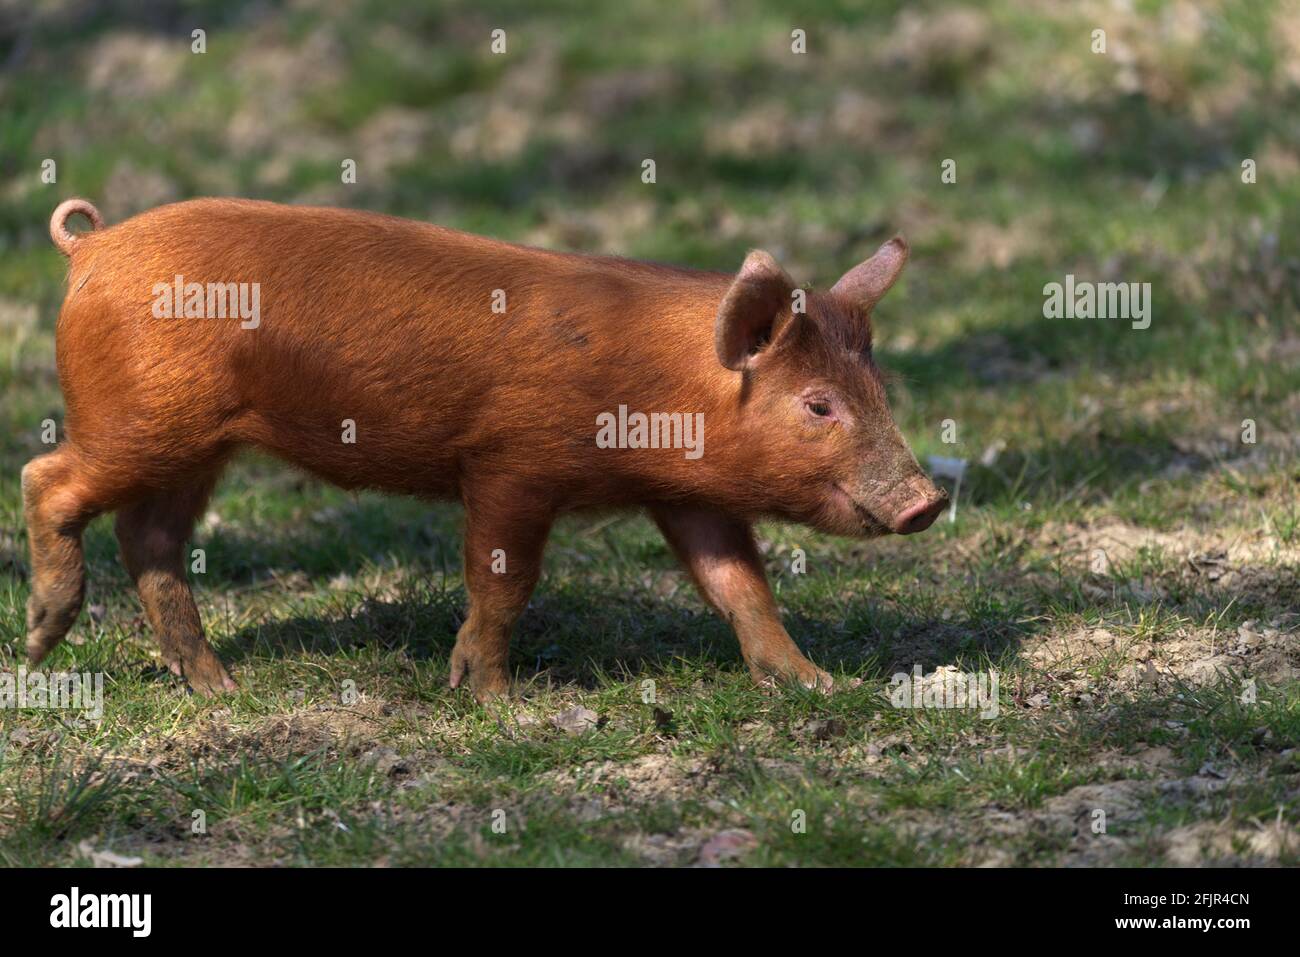 tamworth piglet close up walking Stock Photo